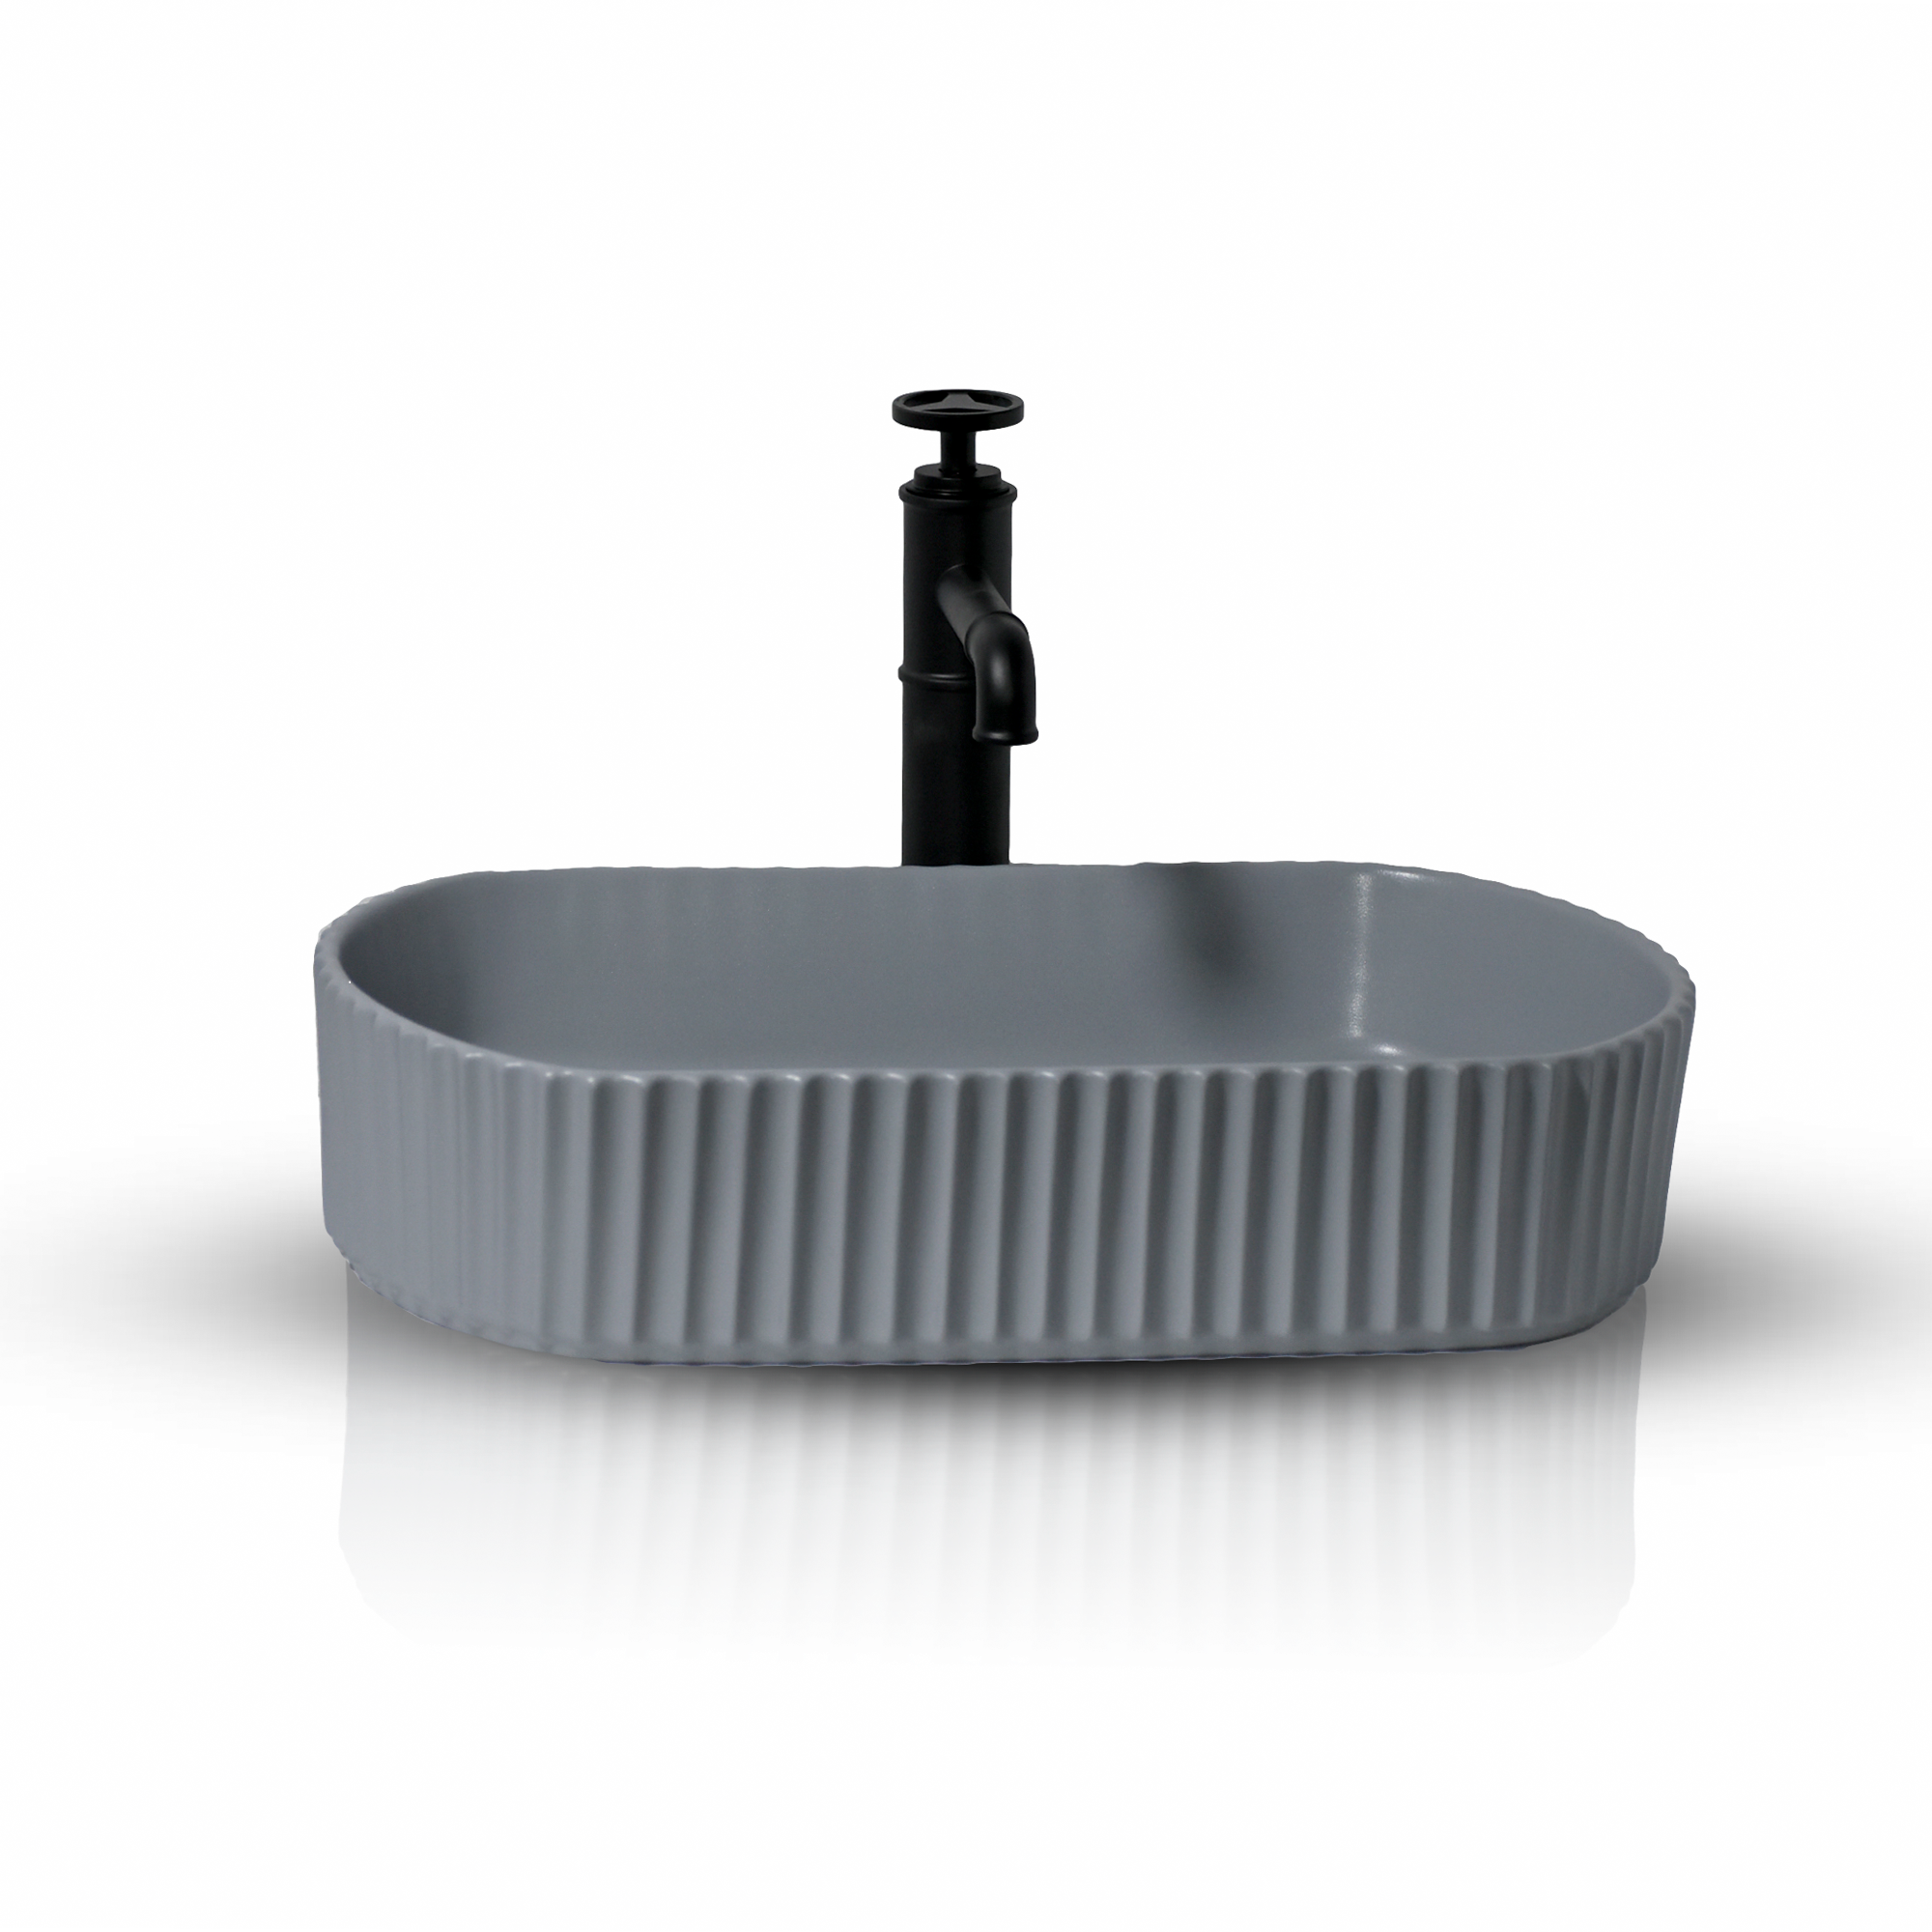 InArt Oval Bathroom Ceramic Vessel Sink Art Basin in Grey Matte Color